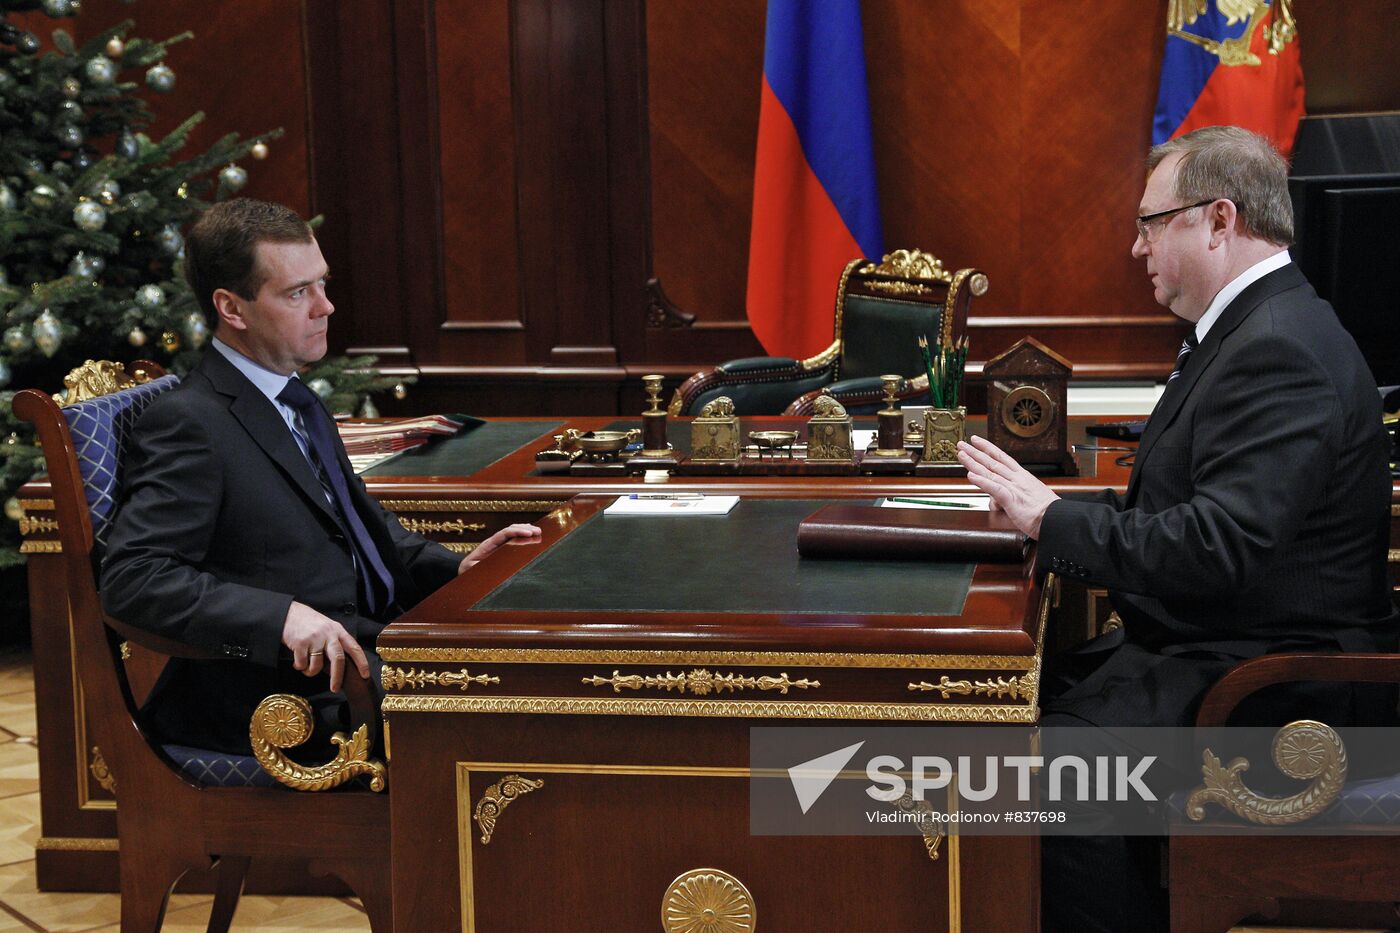 Dmitry Medvedev and Sergei Stepashin